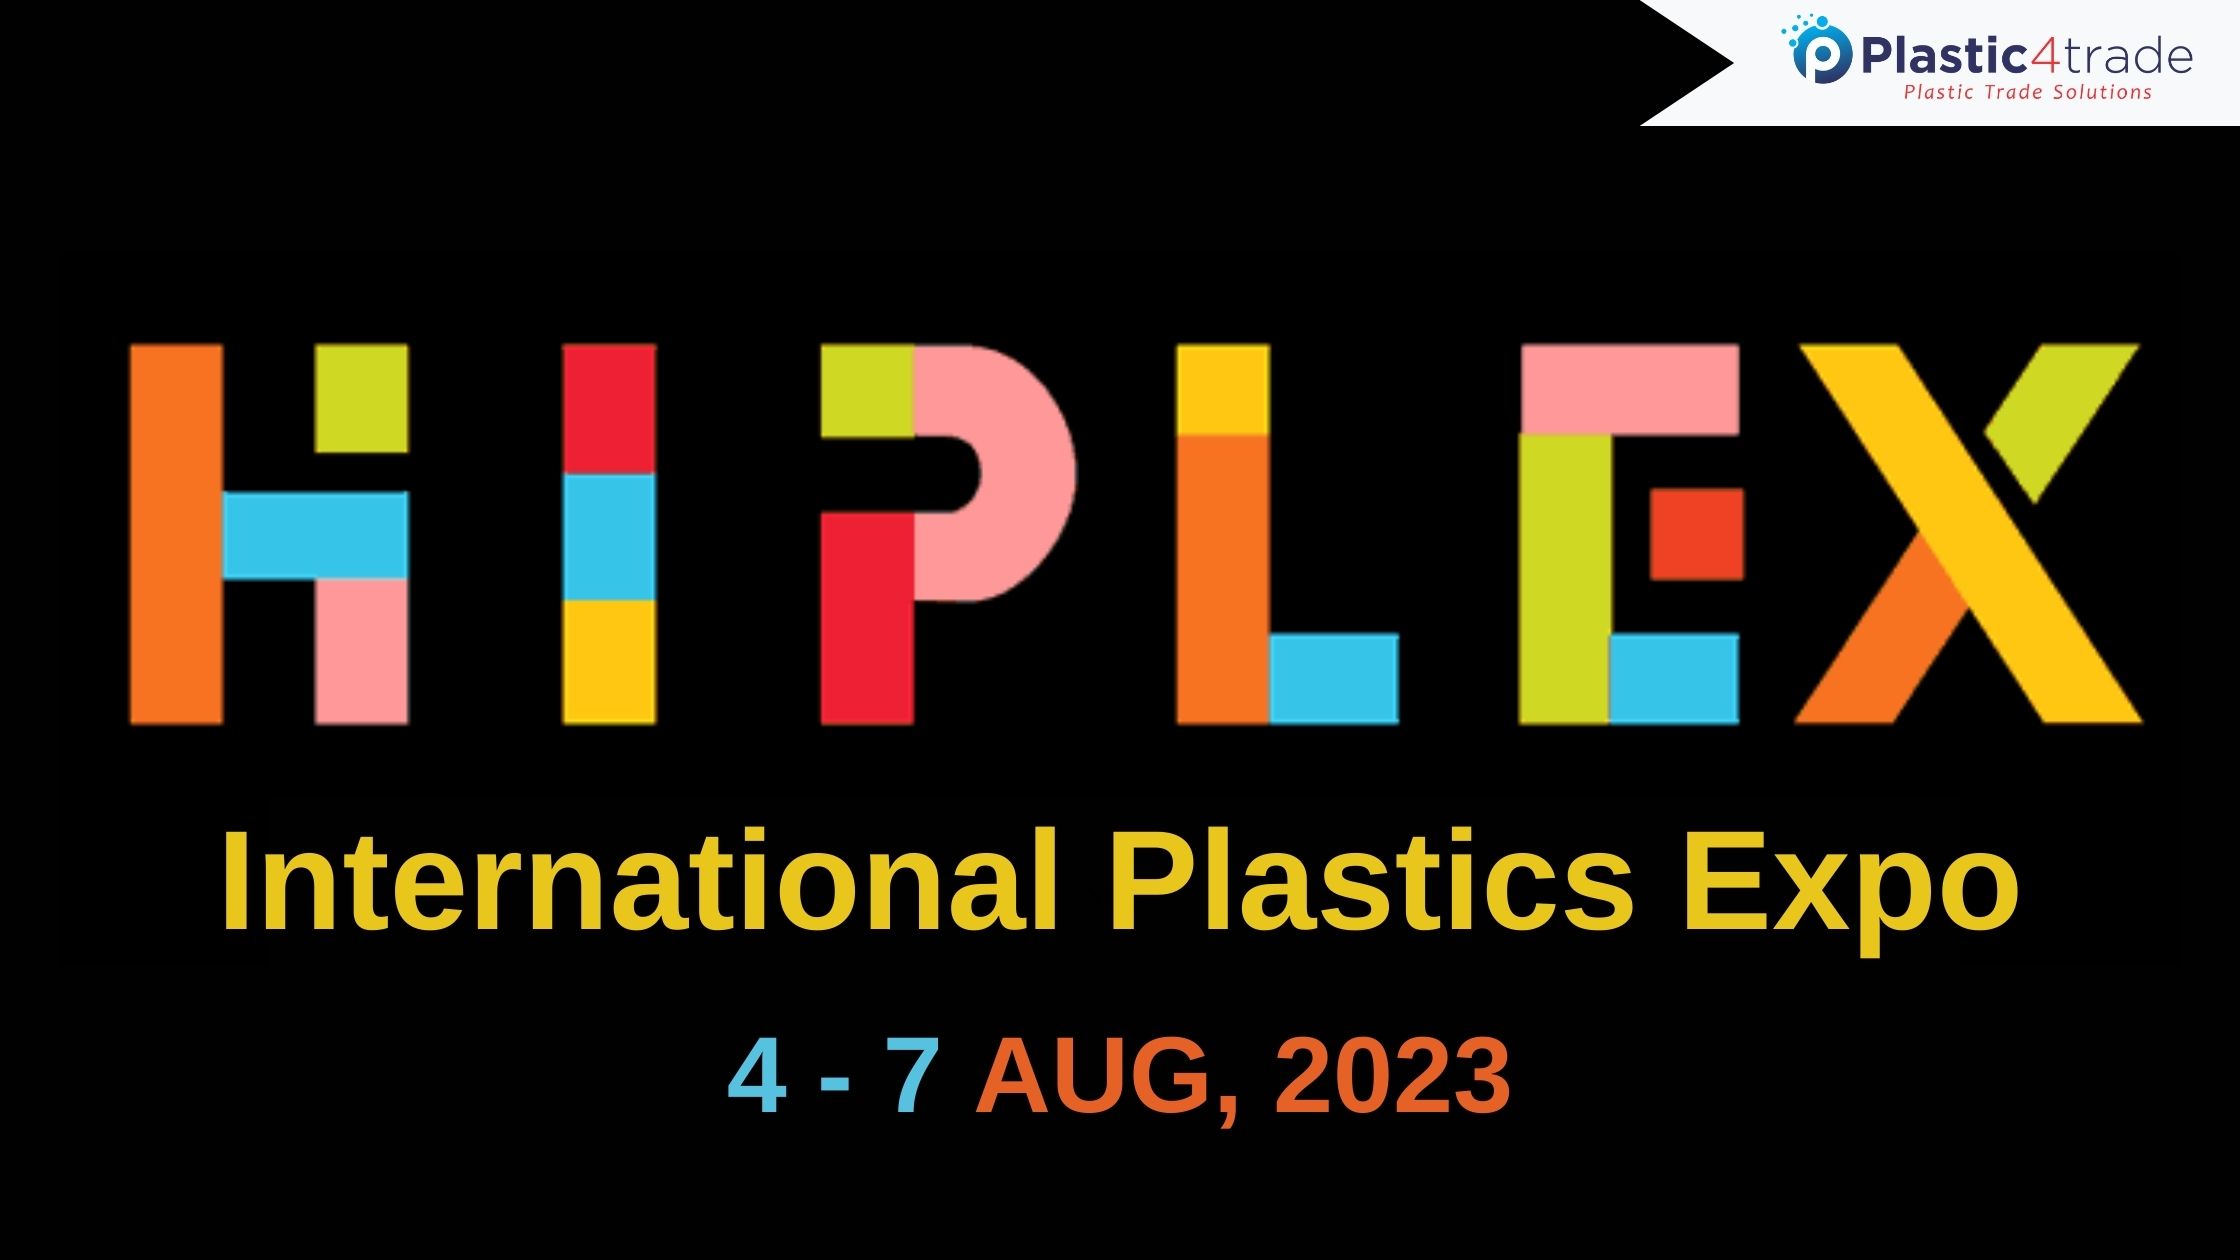 HIPLEX International Plastics Expo 2023